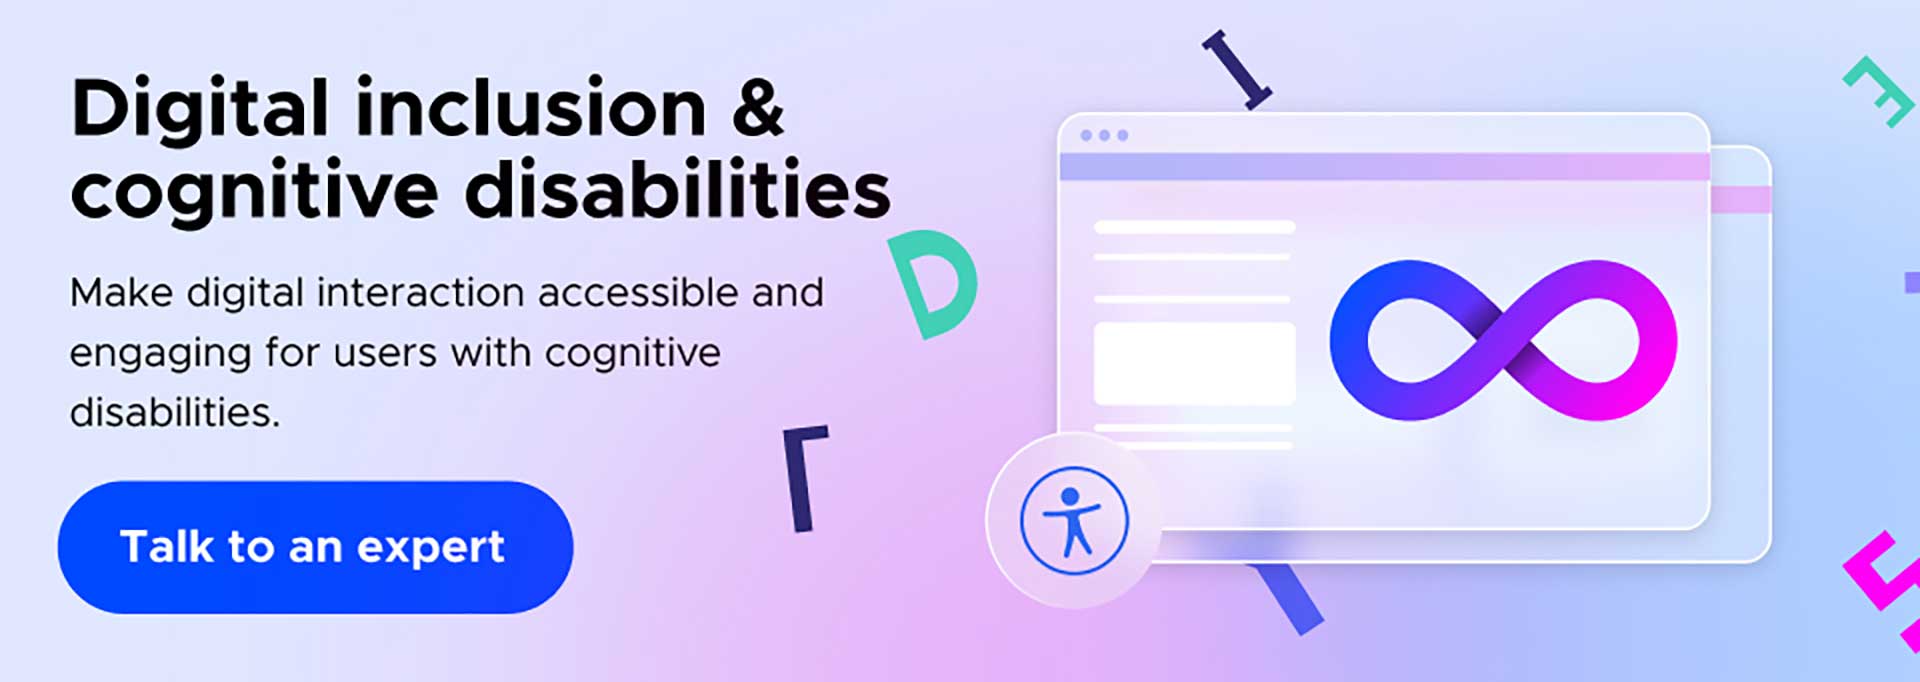 digital inclusion & cognitive disabilities